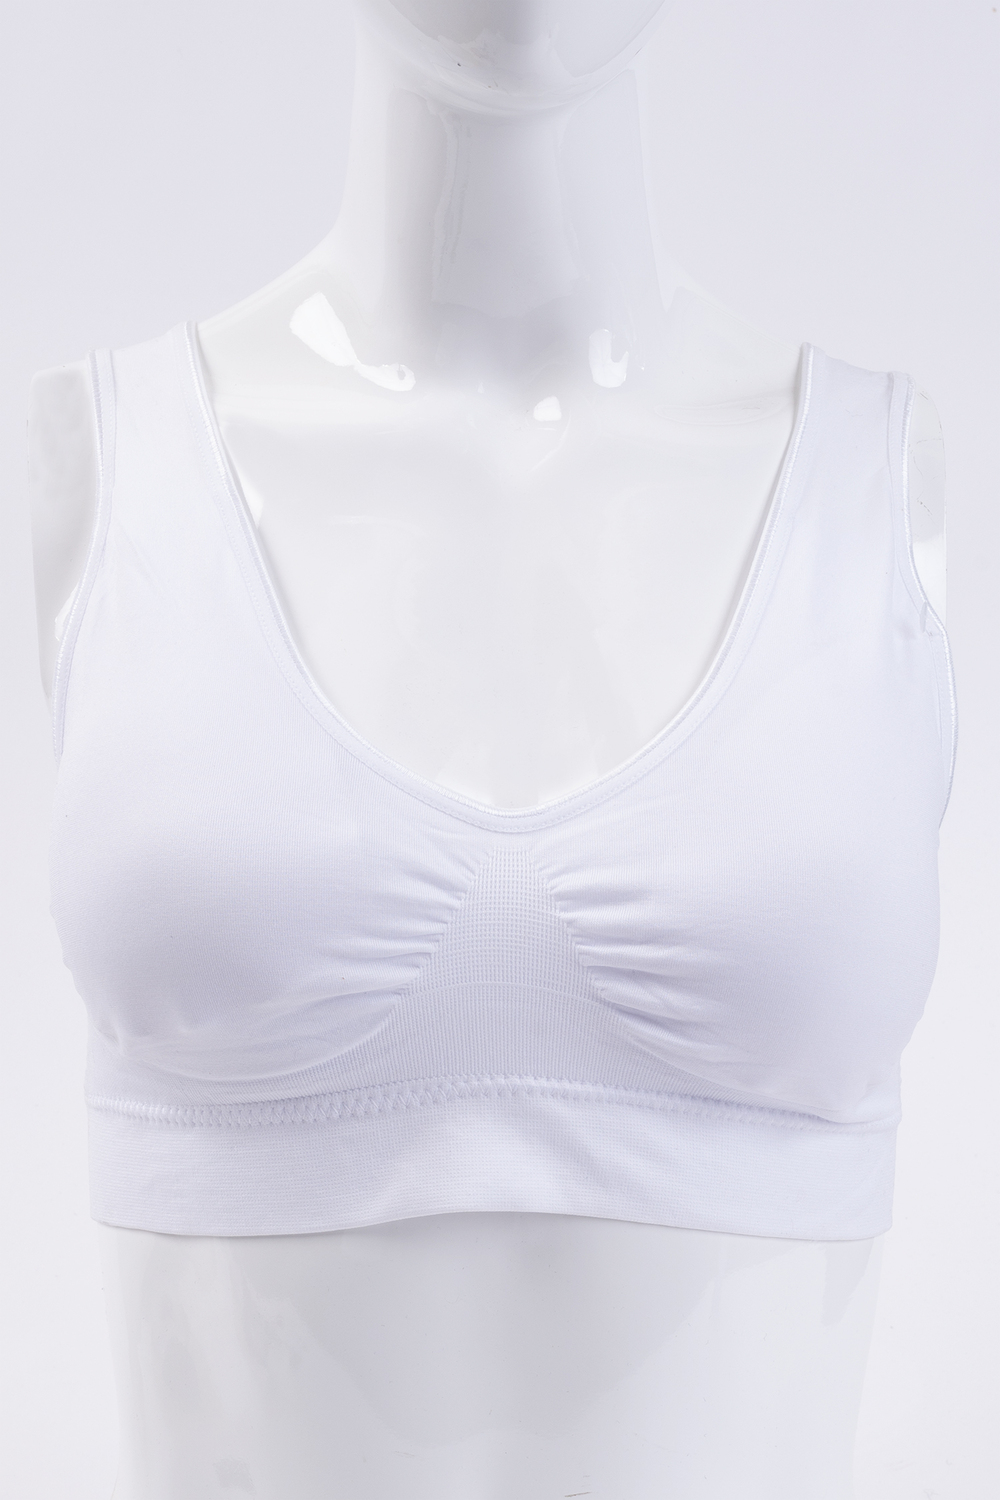 Carole Martin - The original! Full Freedom Comfort bra, white, 34